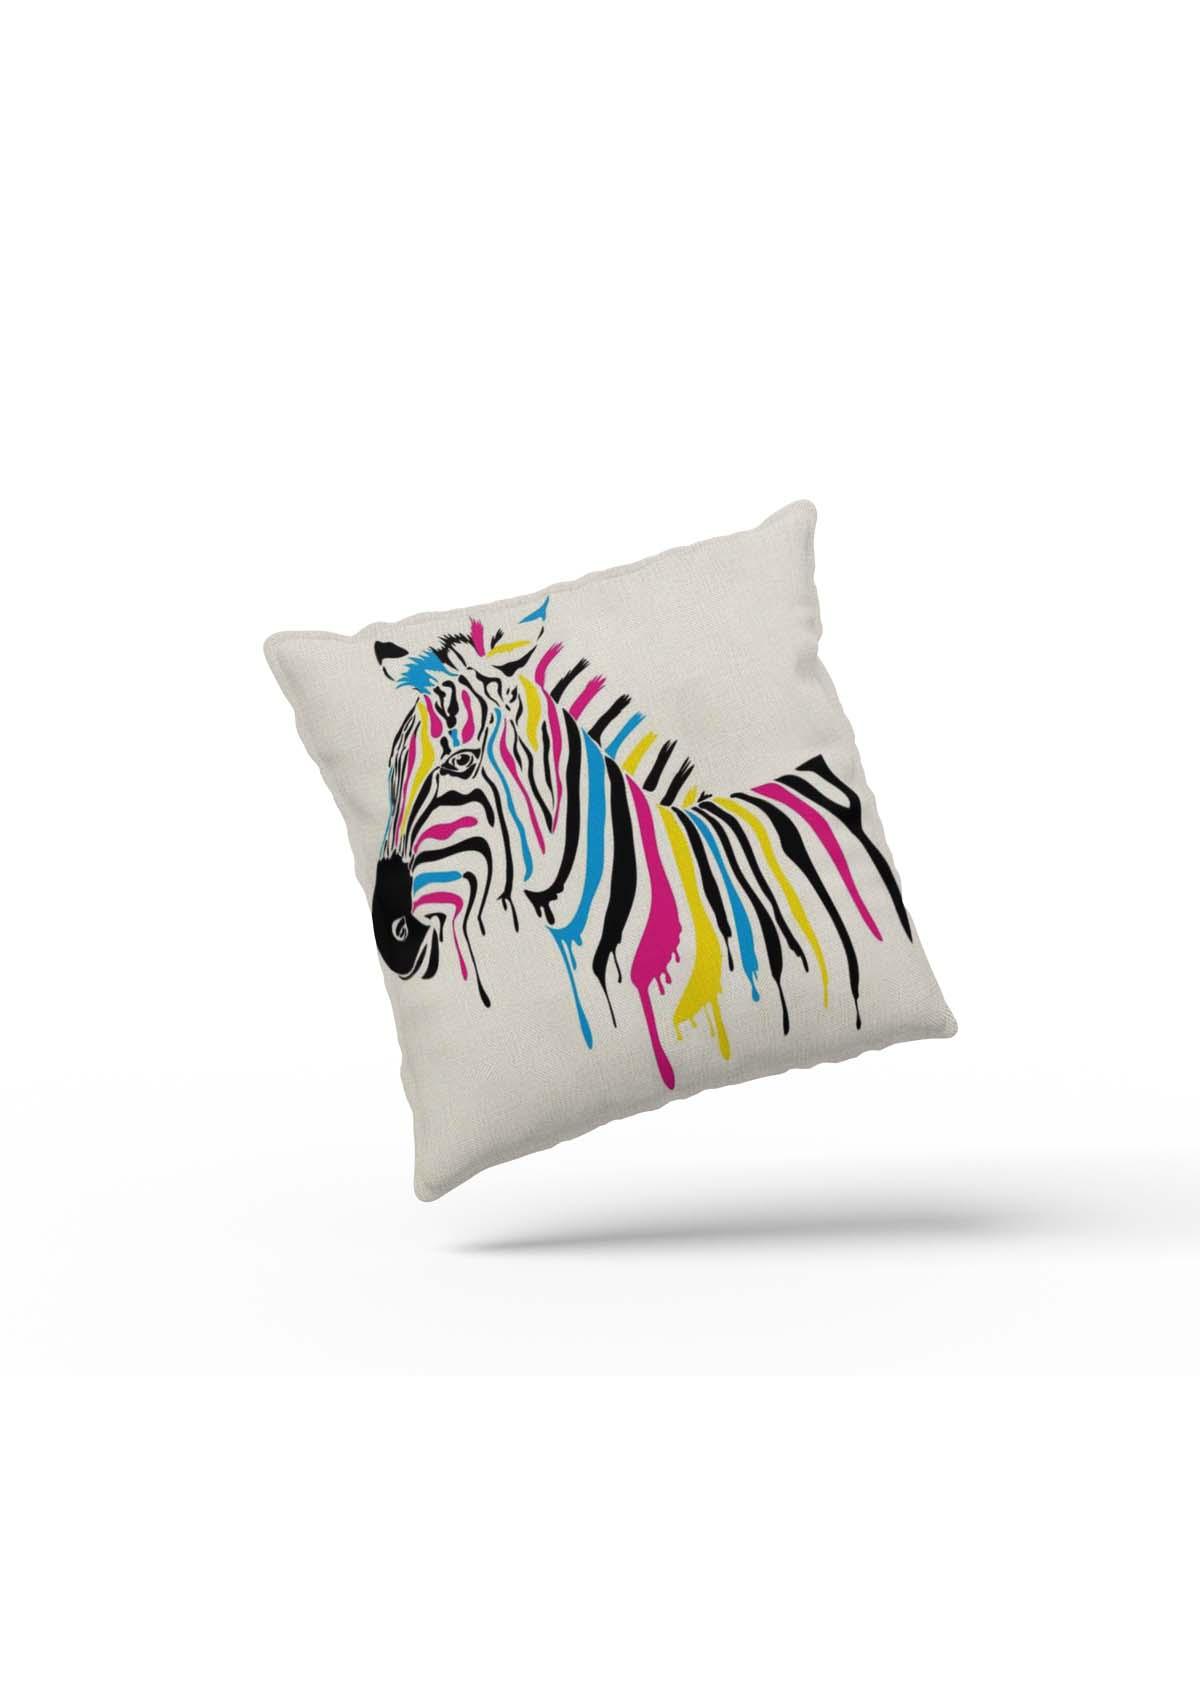 zebra cushion covers multi-colored